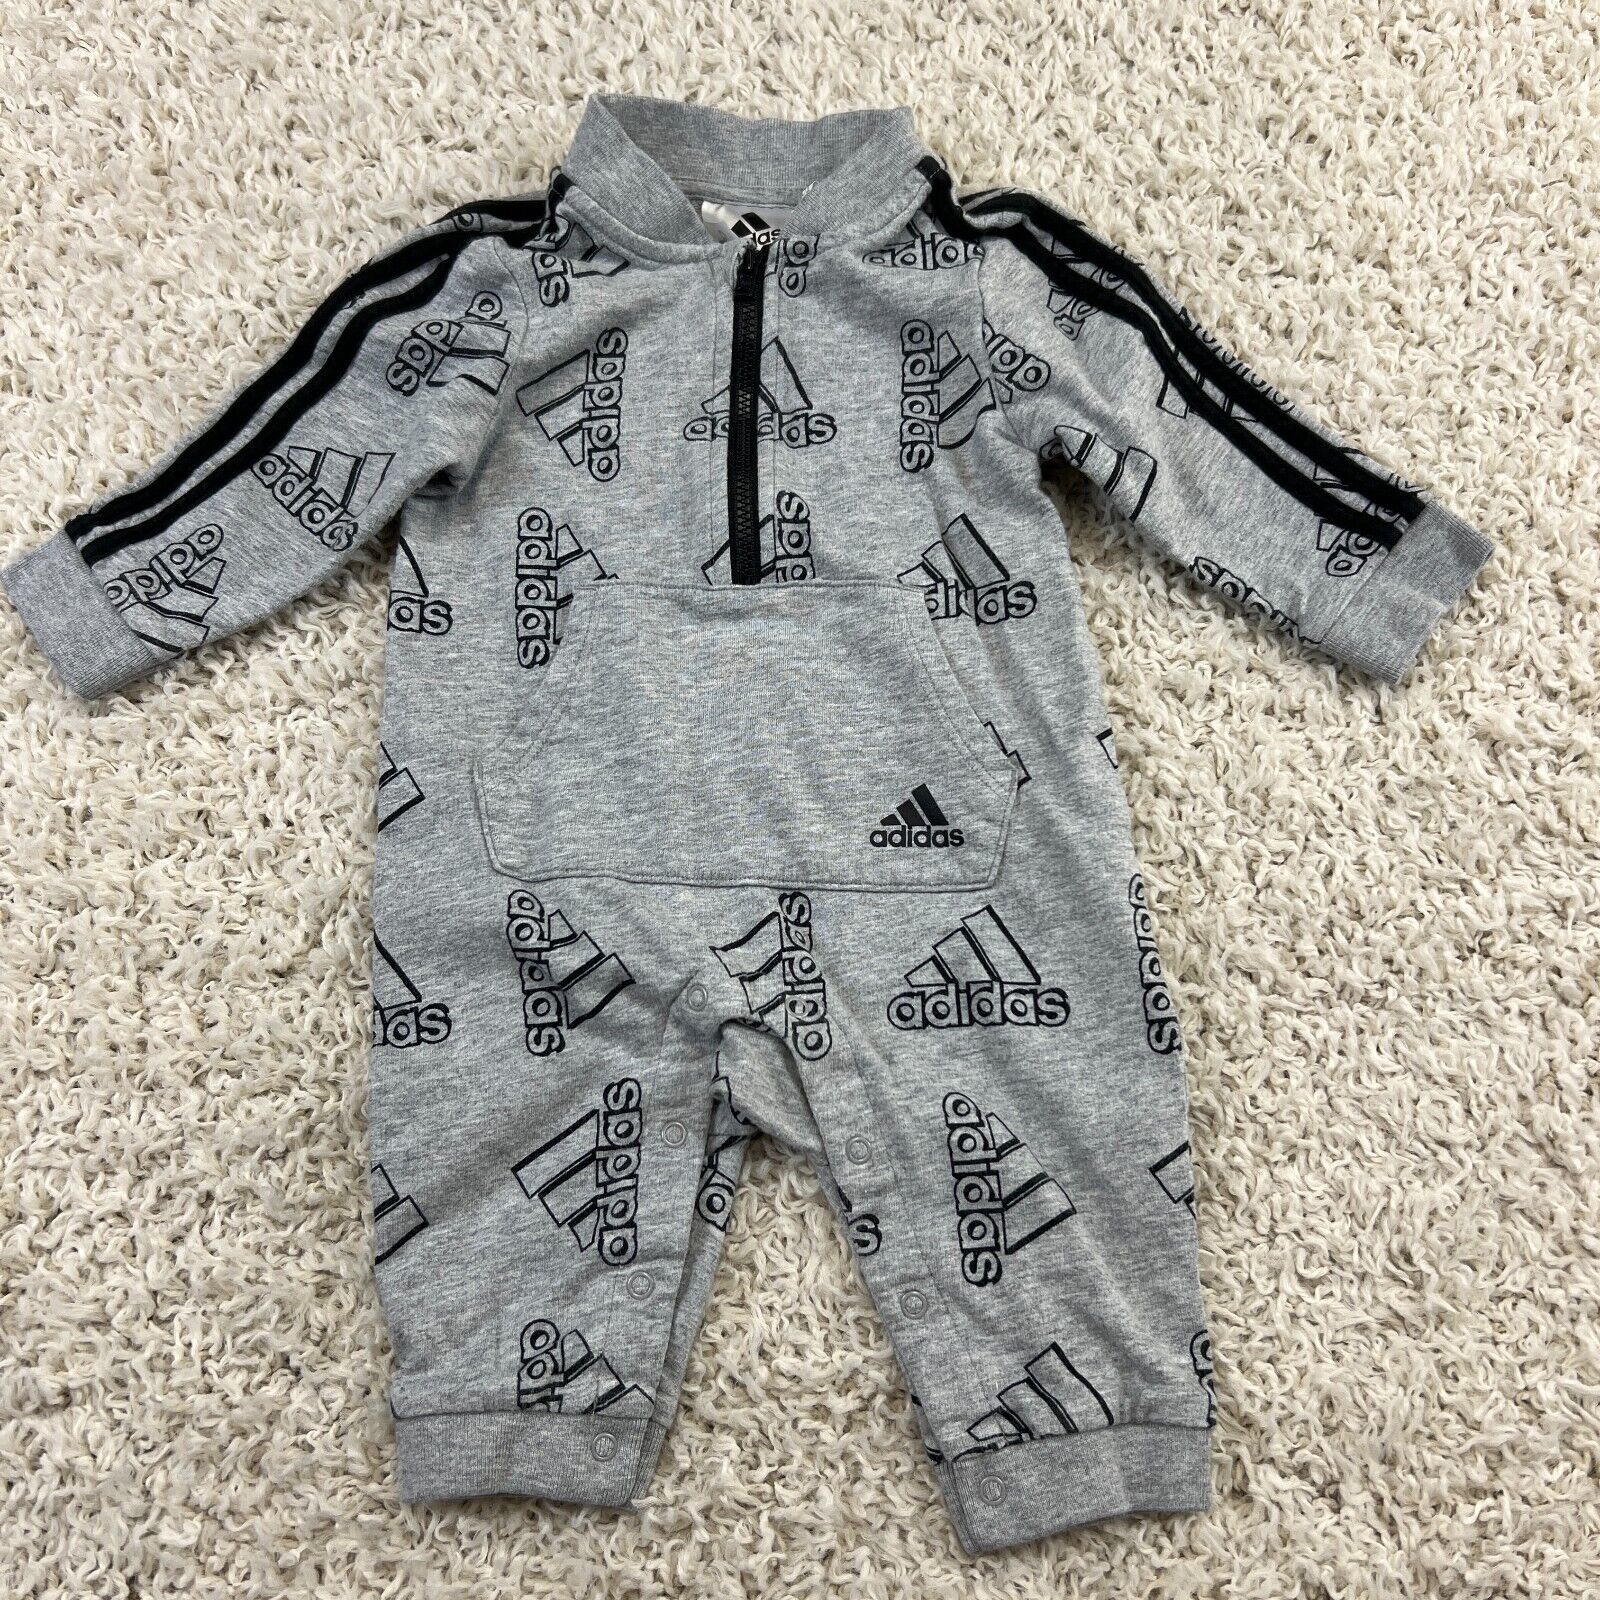 Original Pakistán Repulsión Adidas One Piece Baby Outfit 6M 6 Months Gray BodySuit Jumpsuit Logo | eBay